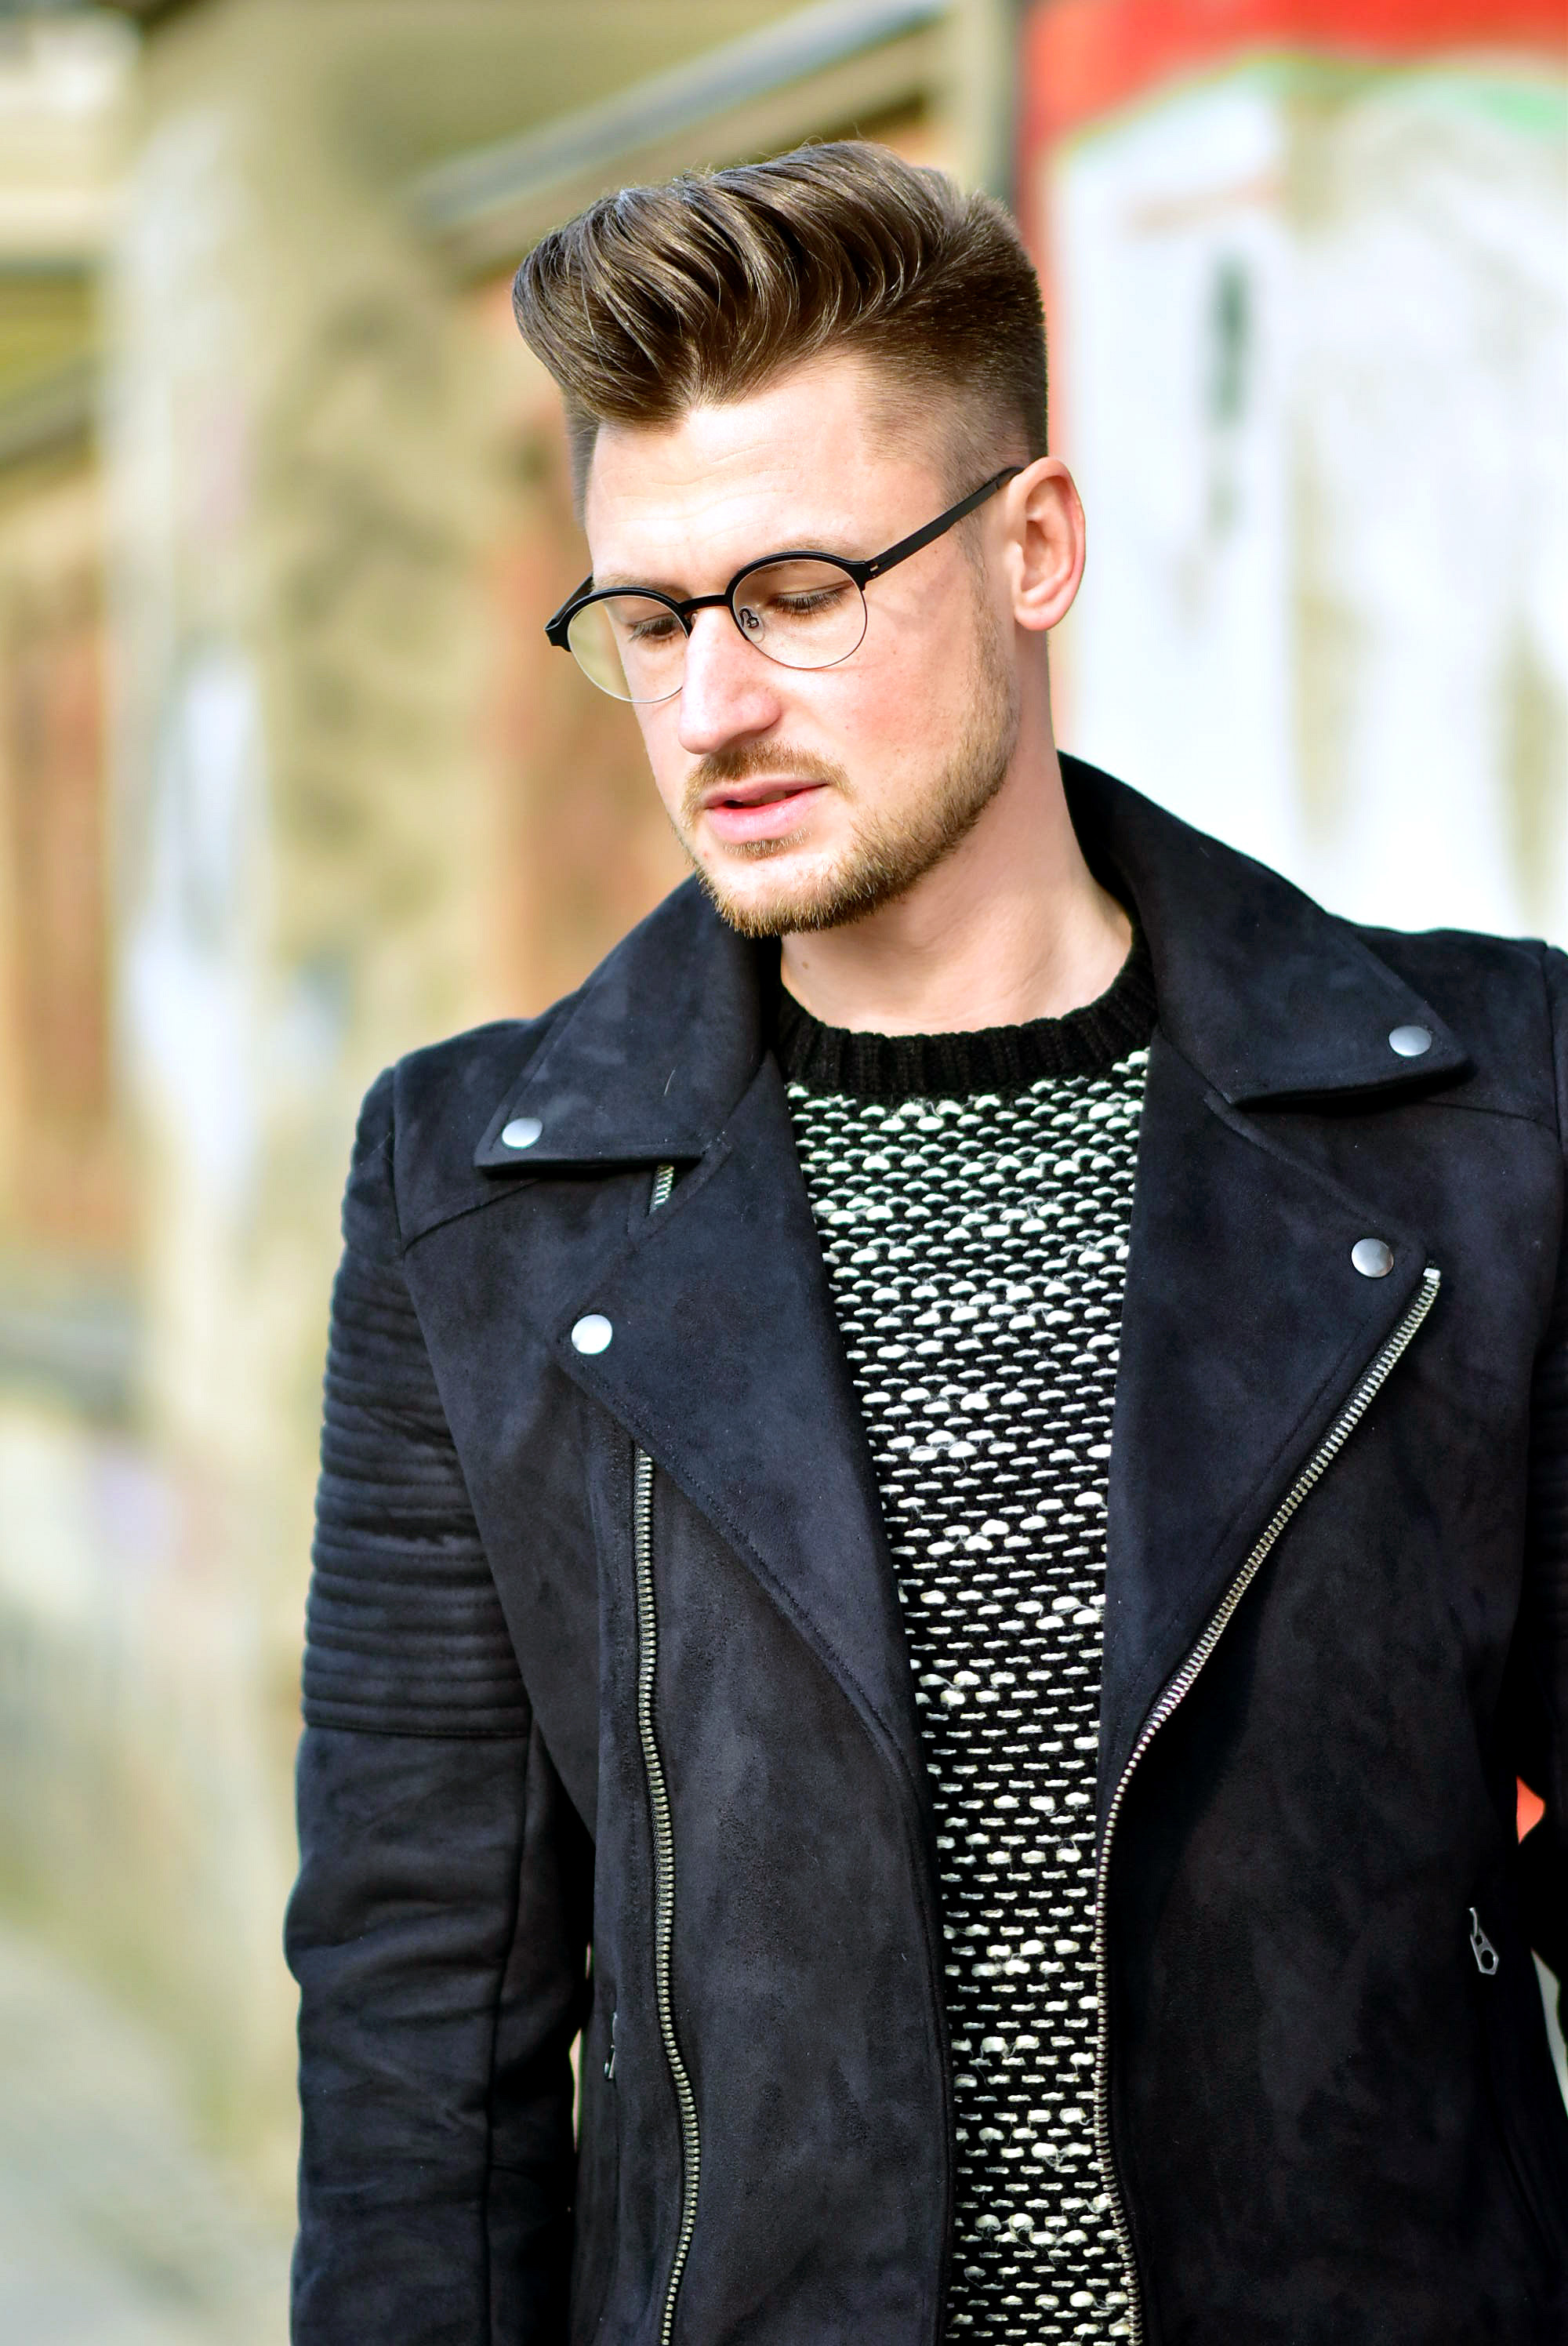 Tommeezjerry-Styleblog-Männerblog-Modeblog-Berlin-Outfit-Accessoire-Brille-Glasses-Model-YUN-Eyewear